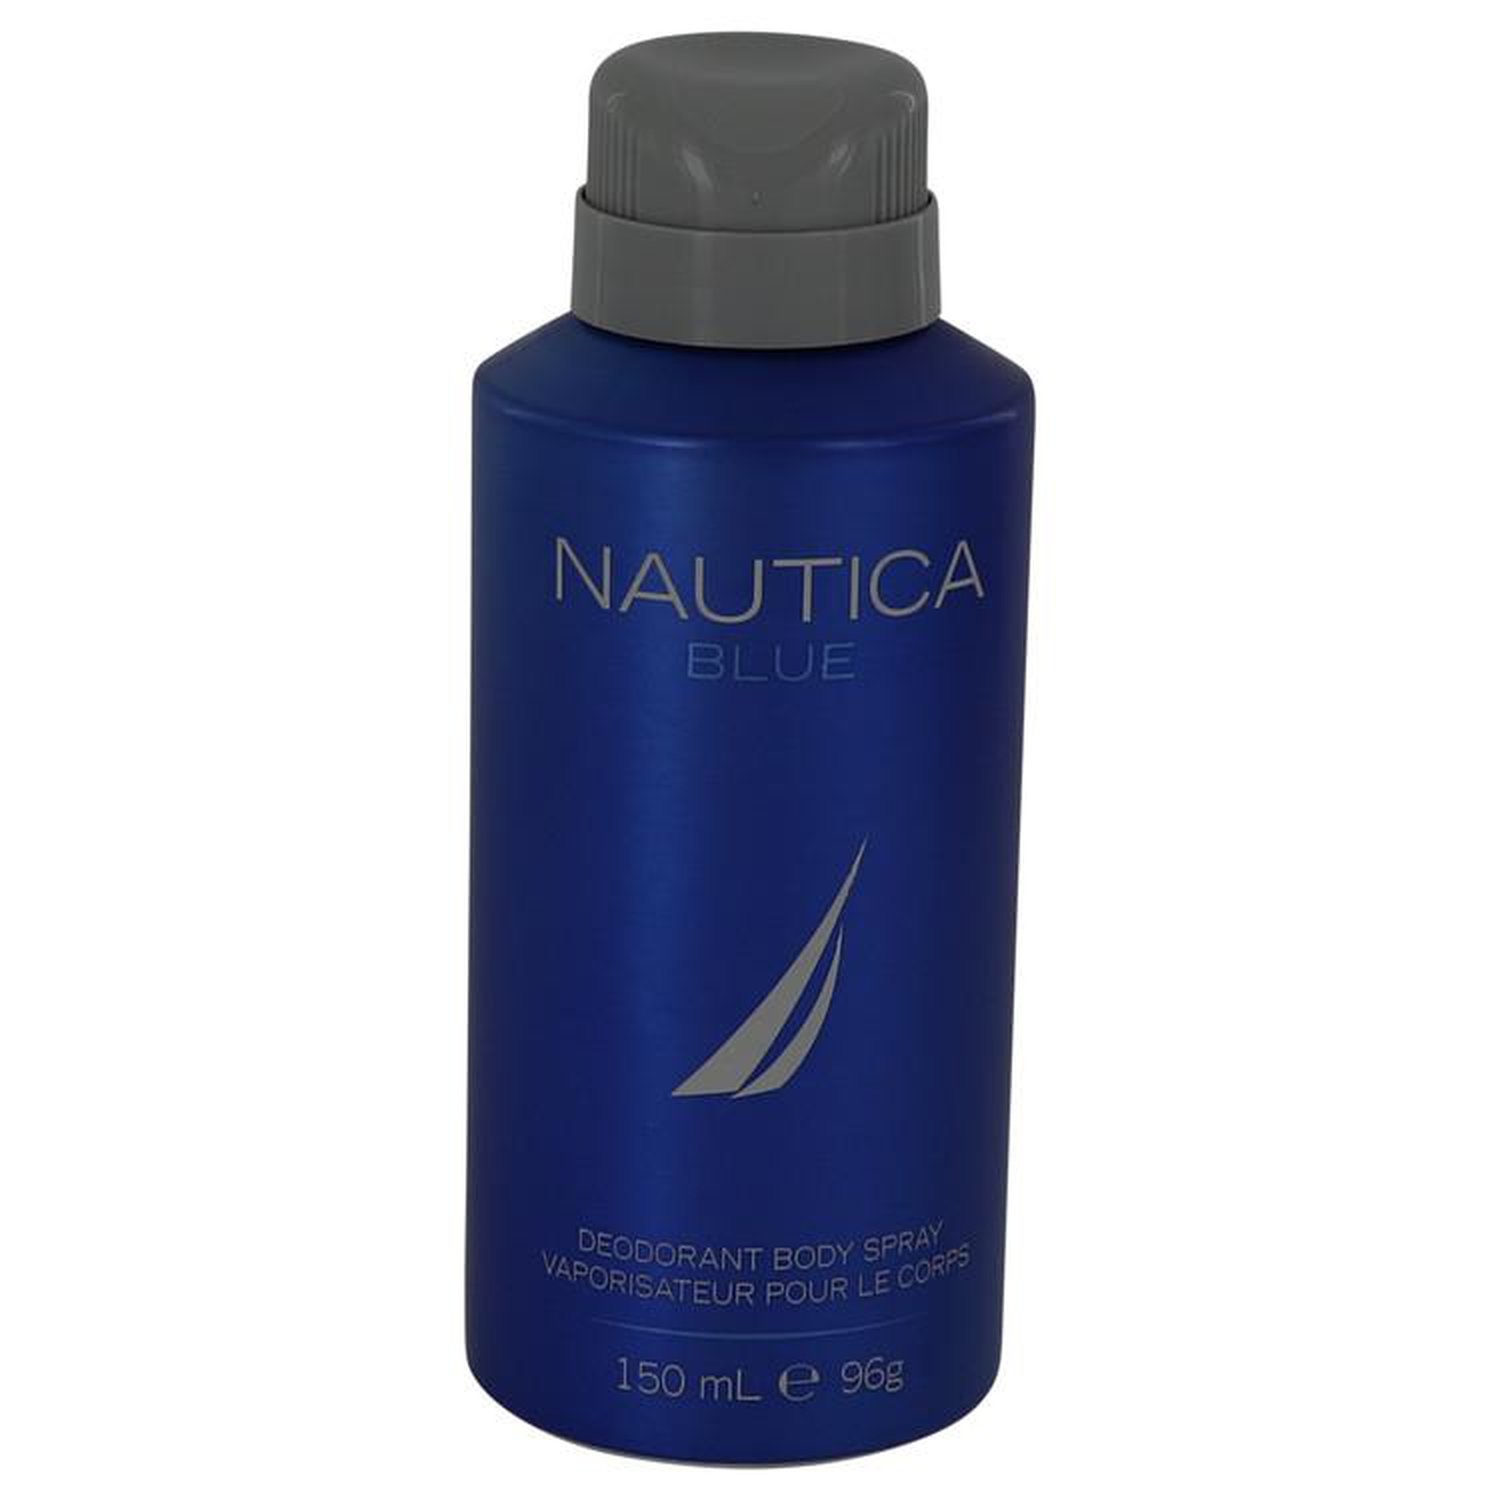 NAUTICA BLUE by Nautica Deodorant Spray (Men) 5 oz